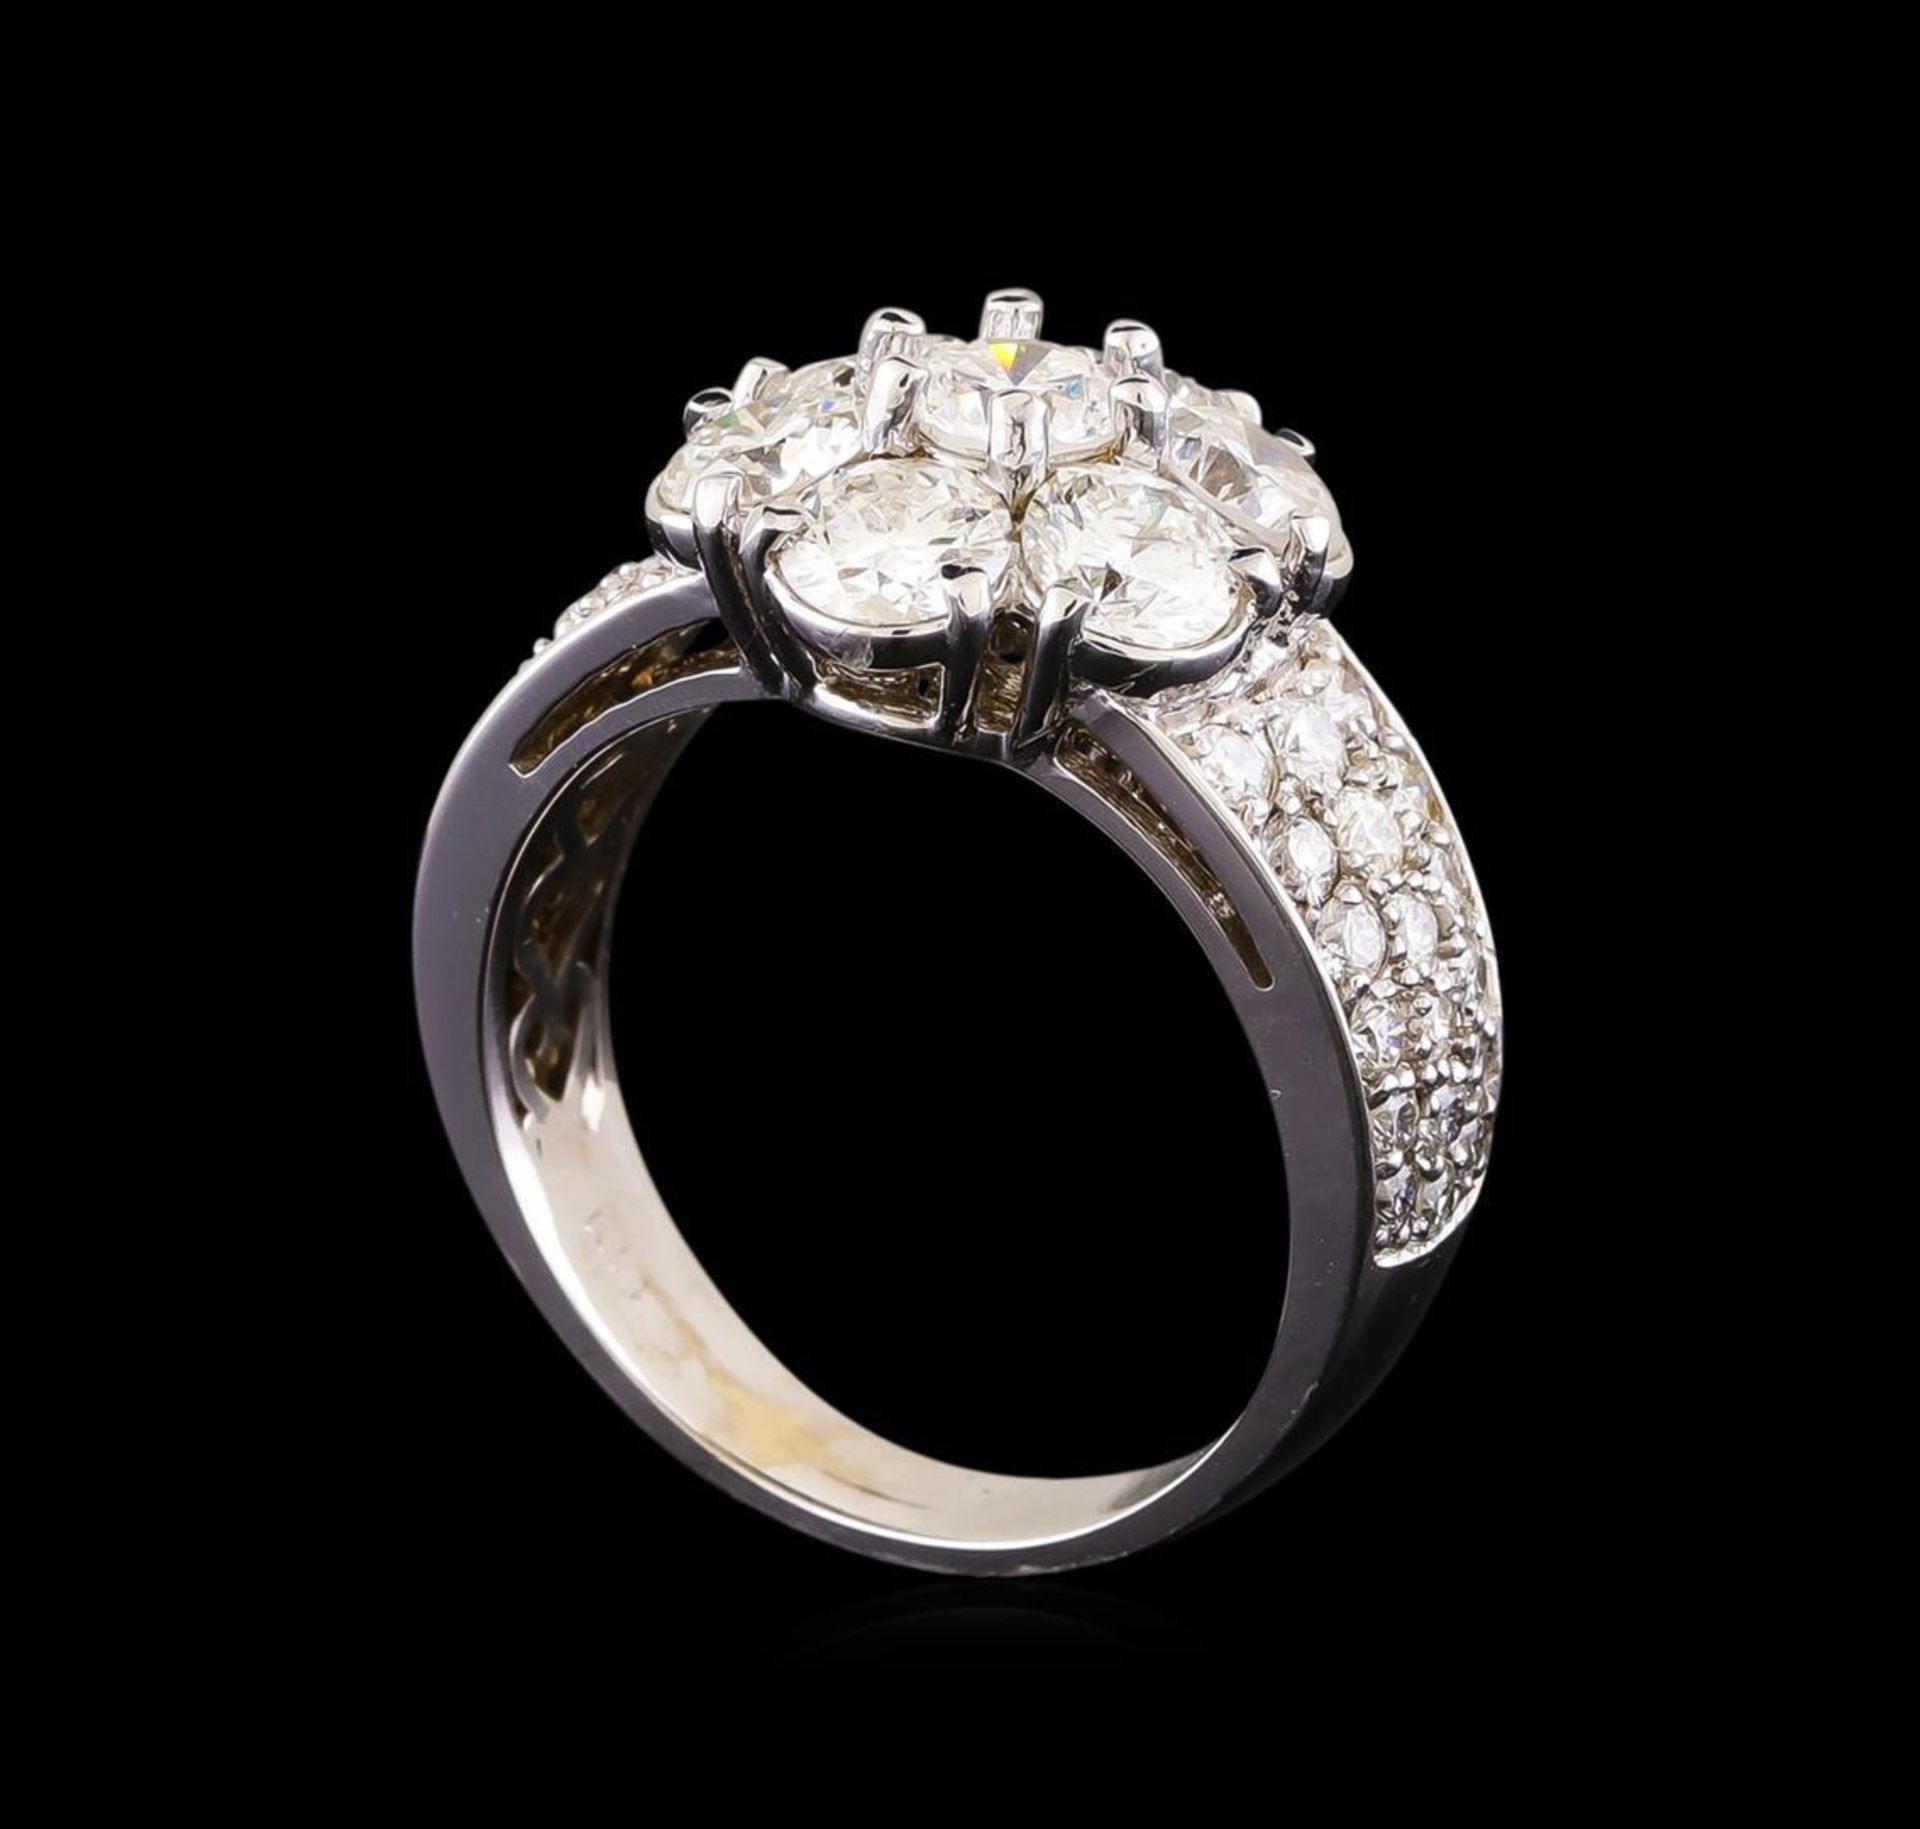 14KT White Gold 2.42 ctw Diamond Ring - Image 4 of 5